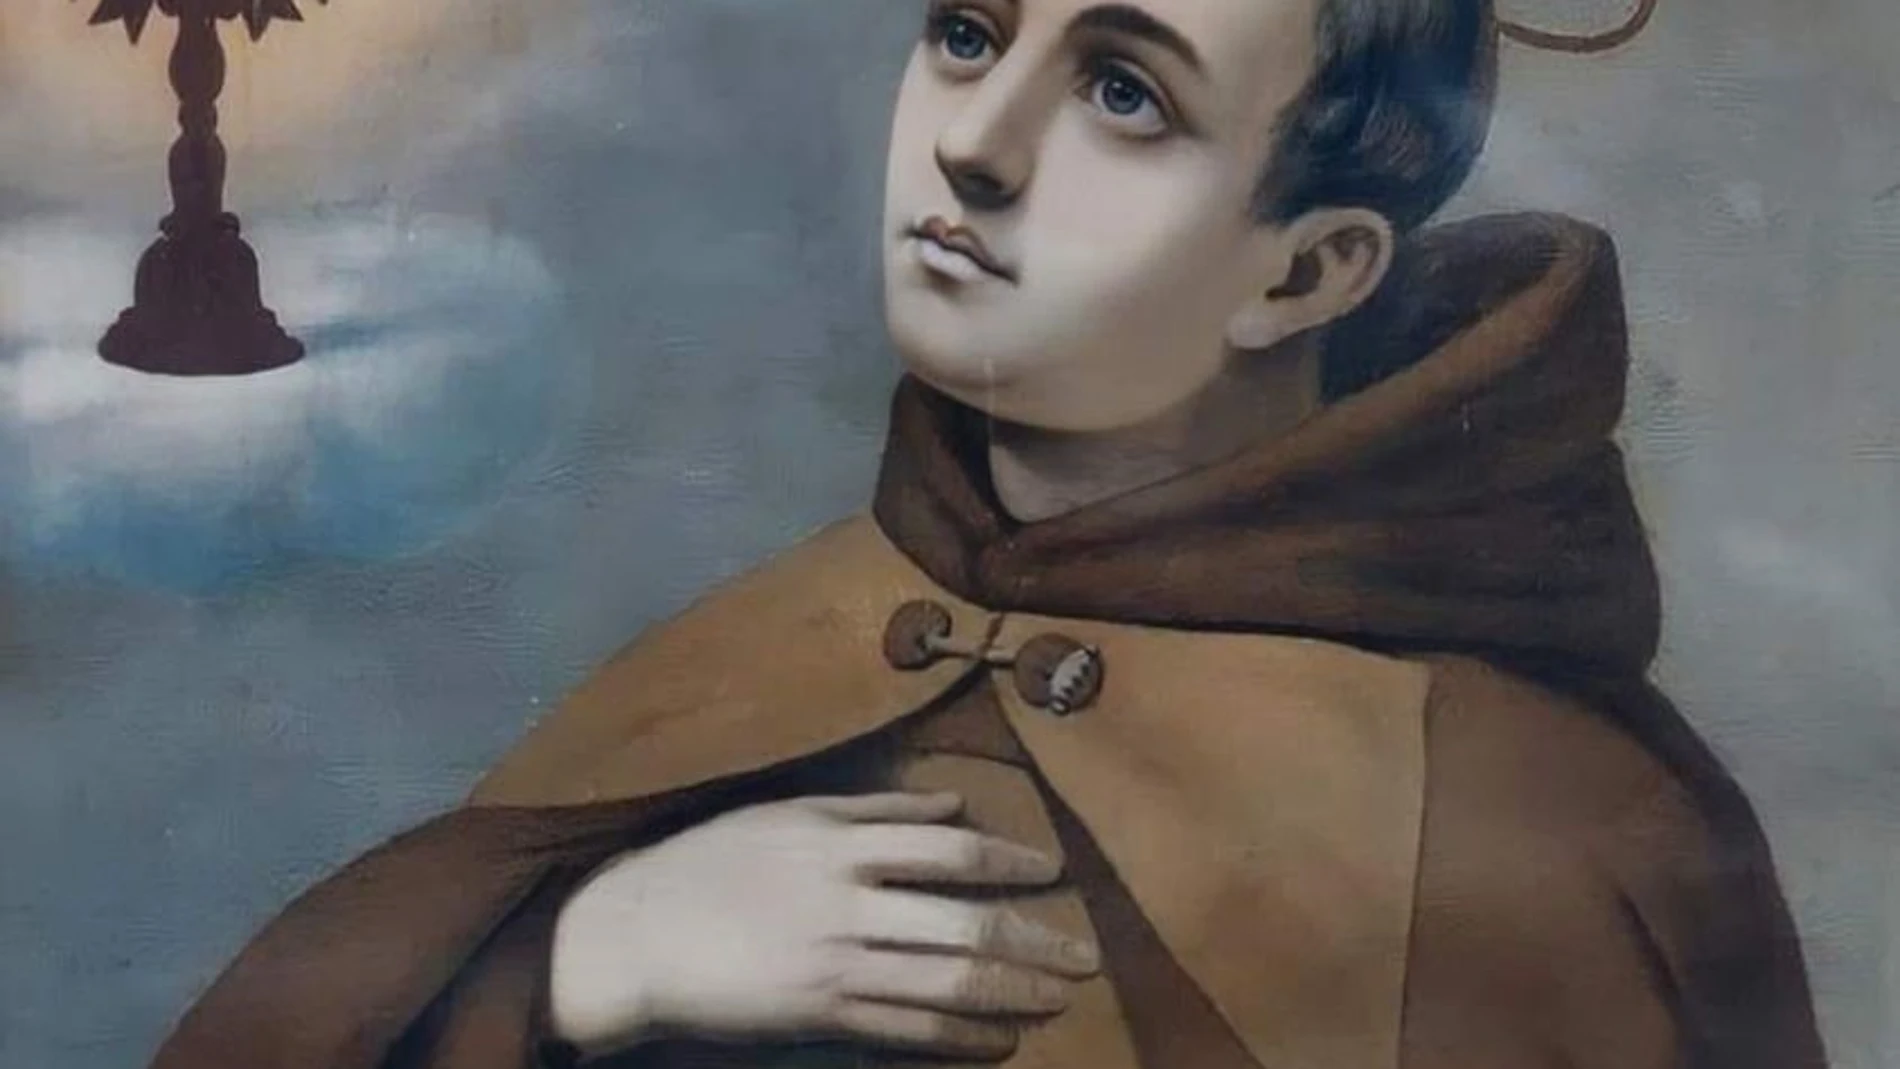 San Pascual Bailón fue declarado santo en 1690